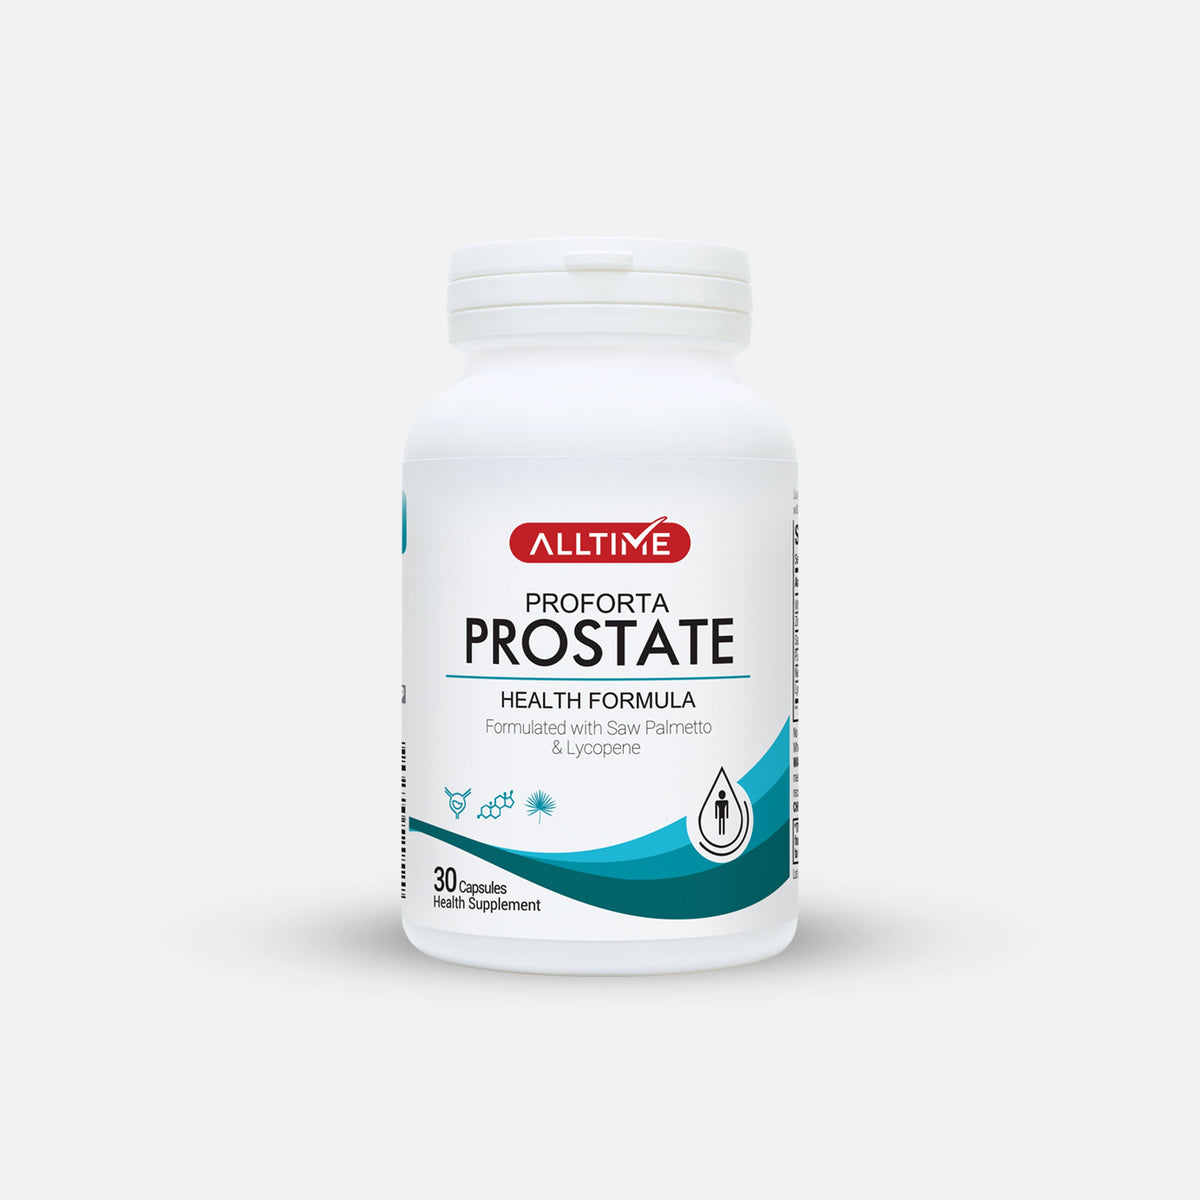 AllTime Proforta (Prostate Health) Capsules 30s